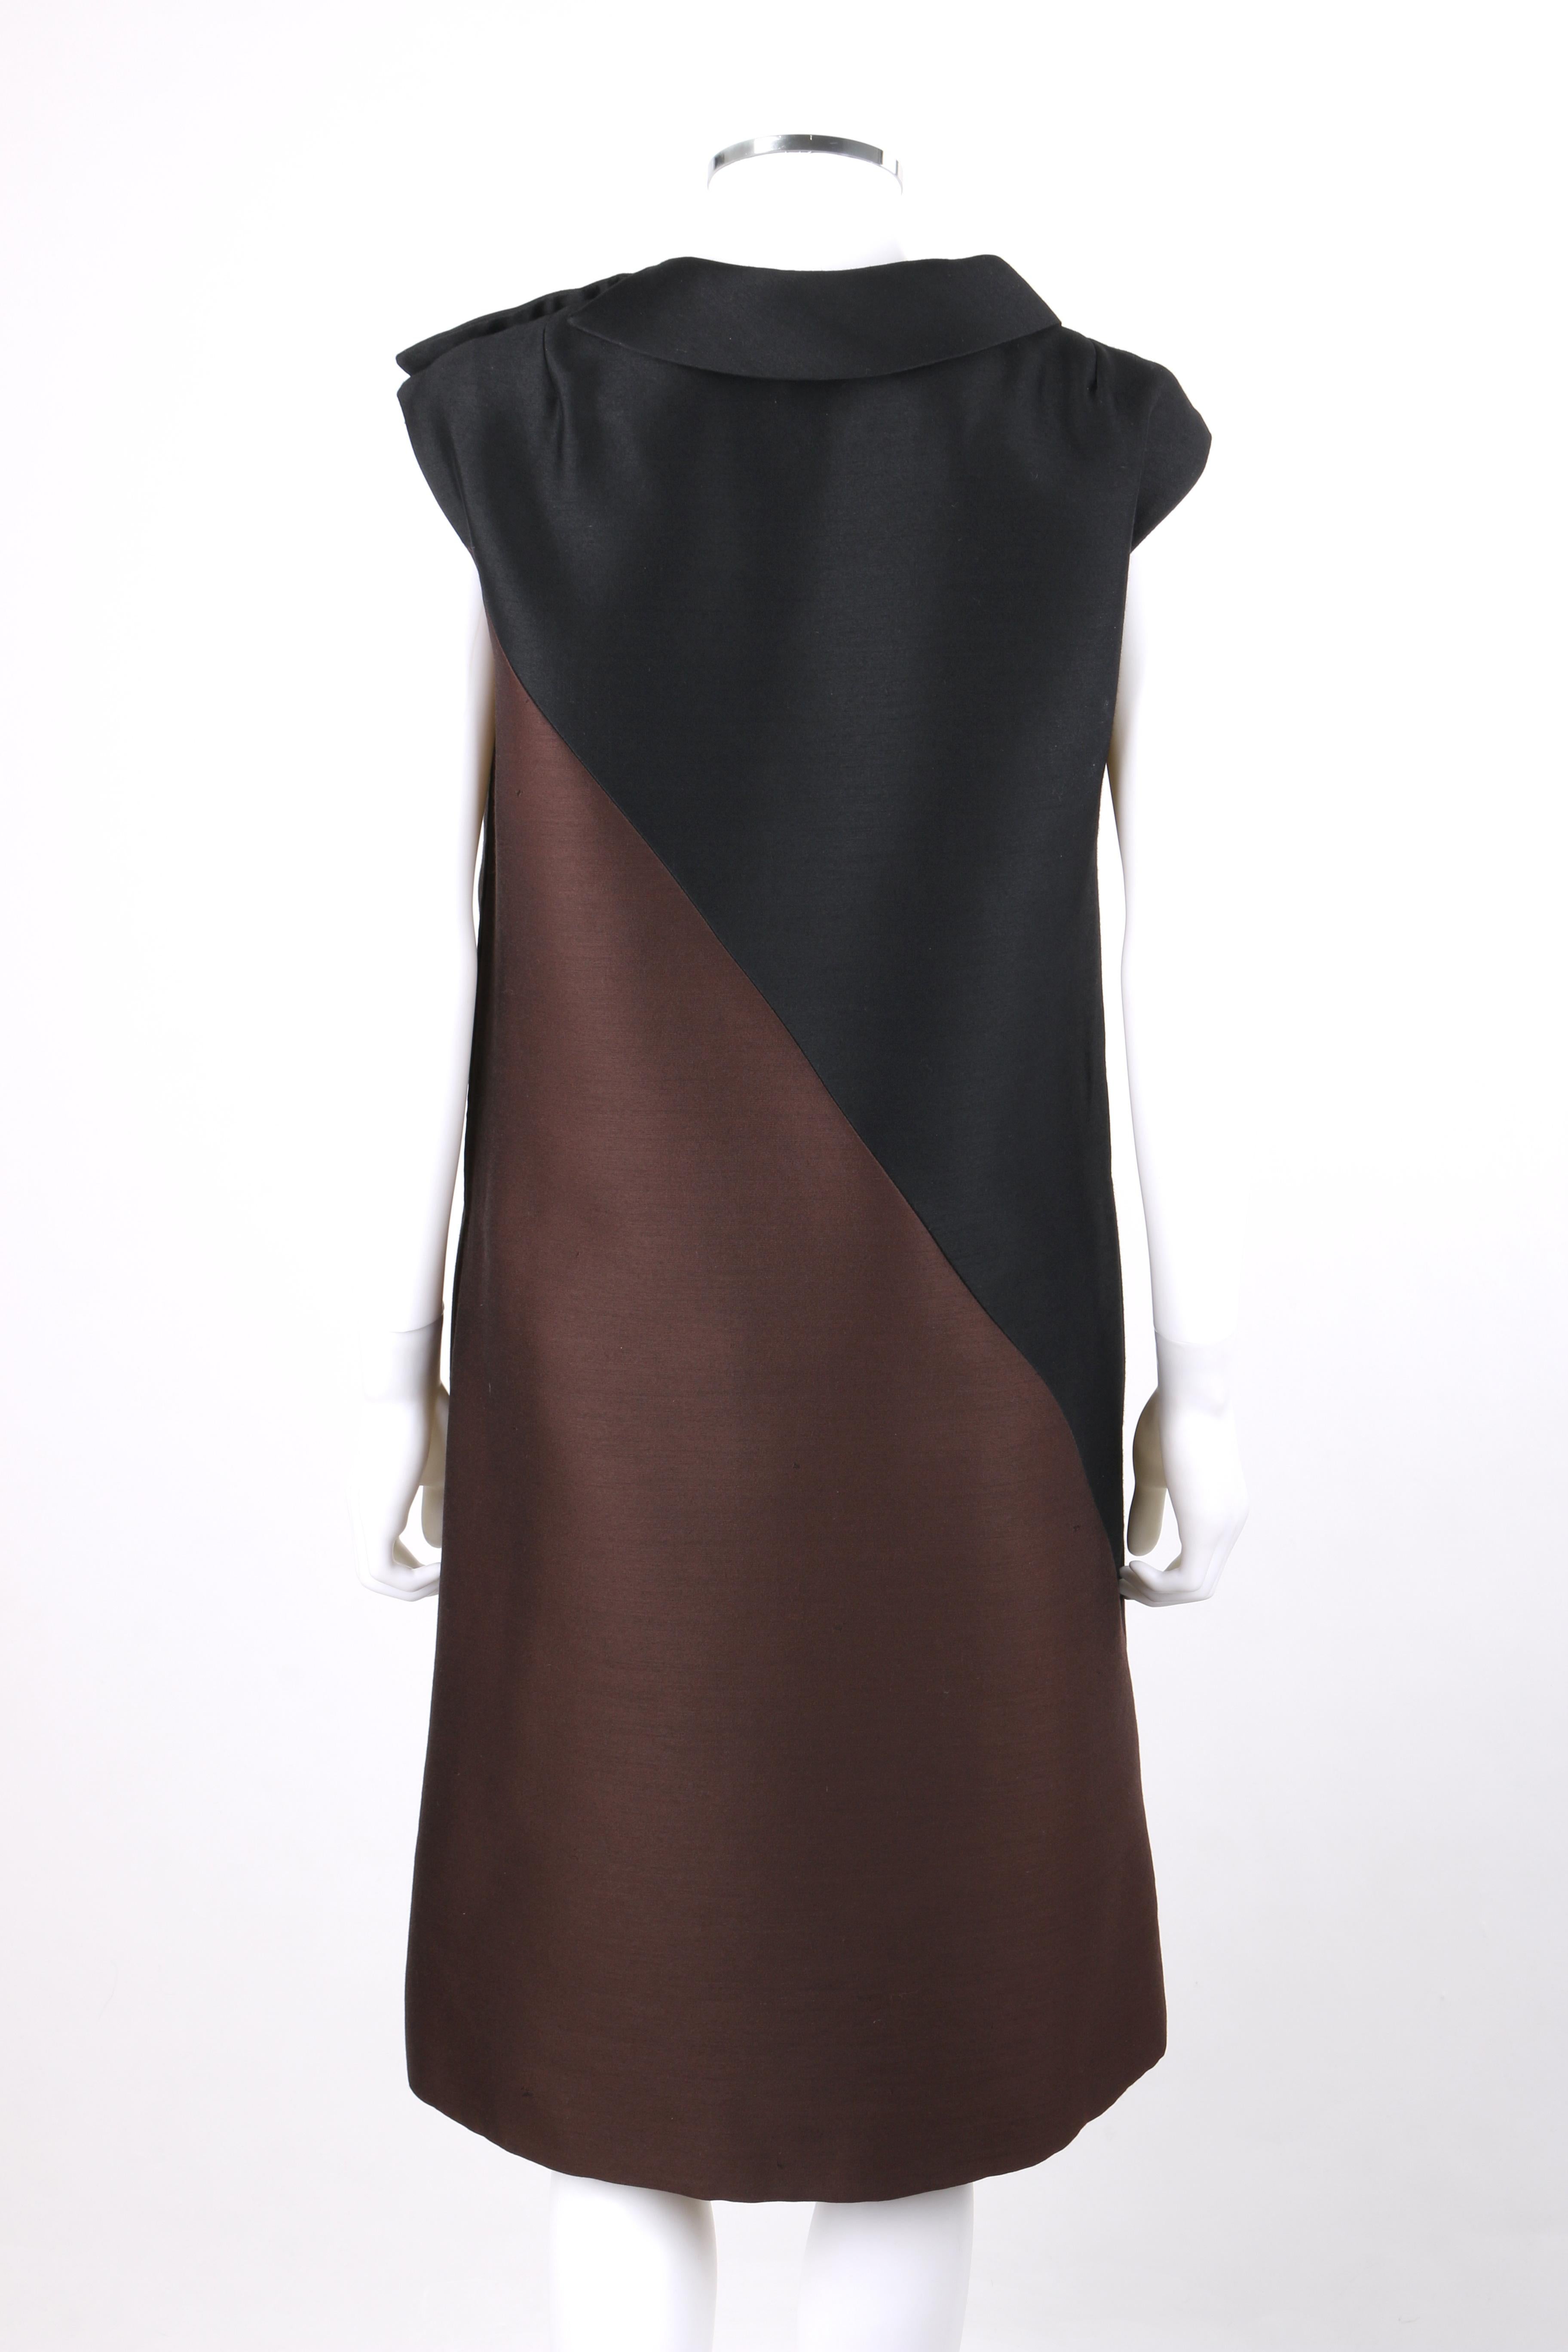 Women's MOE NATHAN New York c.1960’s Brown Black Color Block Mod Sleeveless Shift Dress